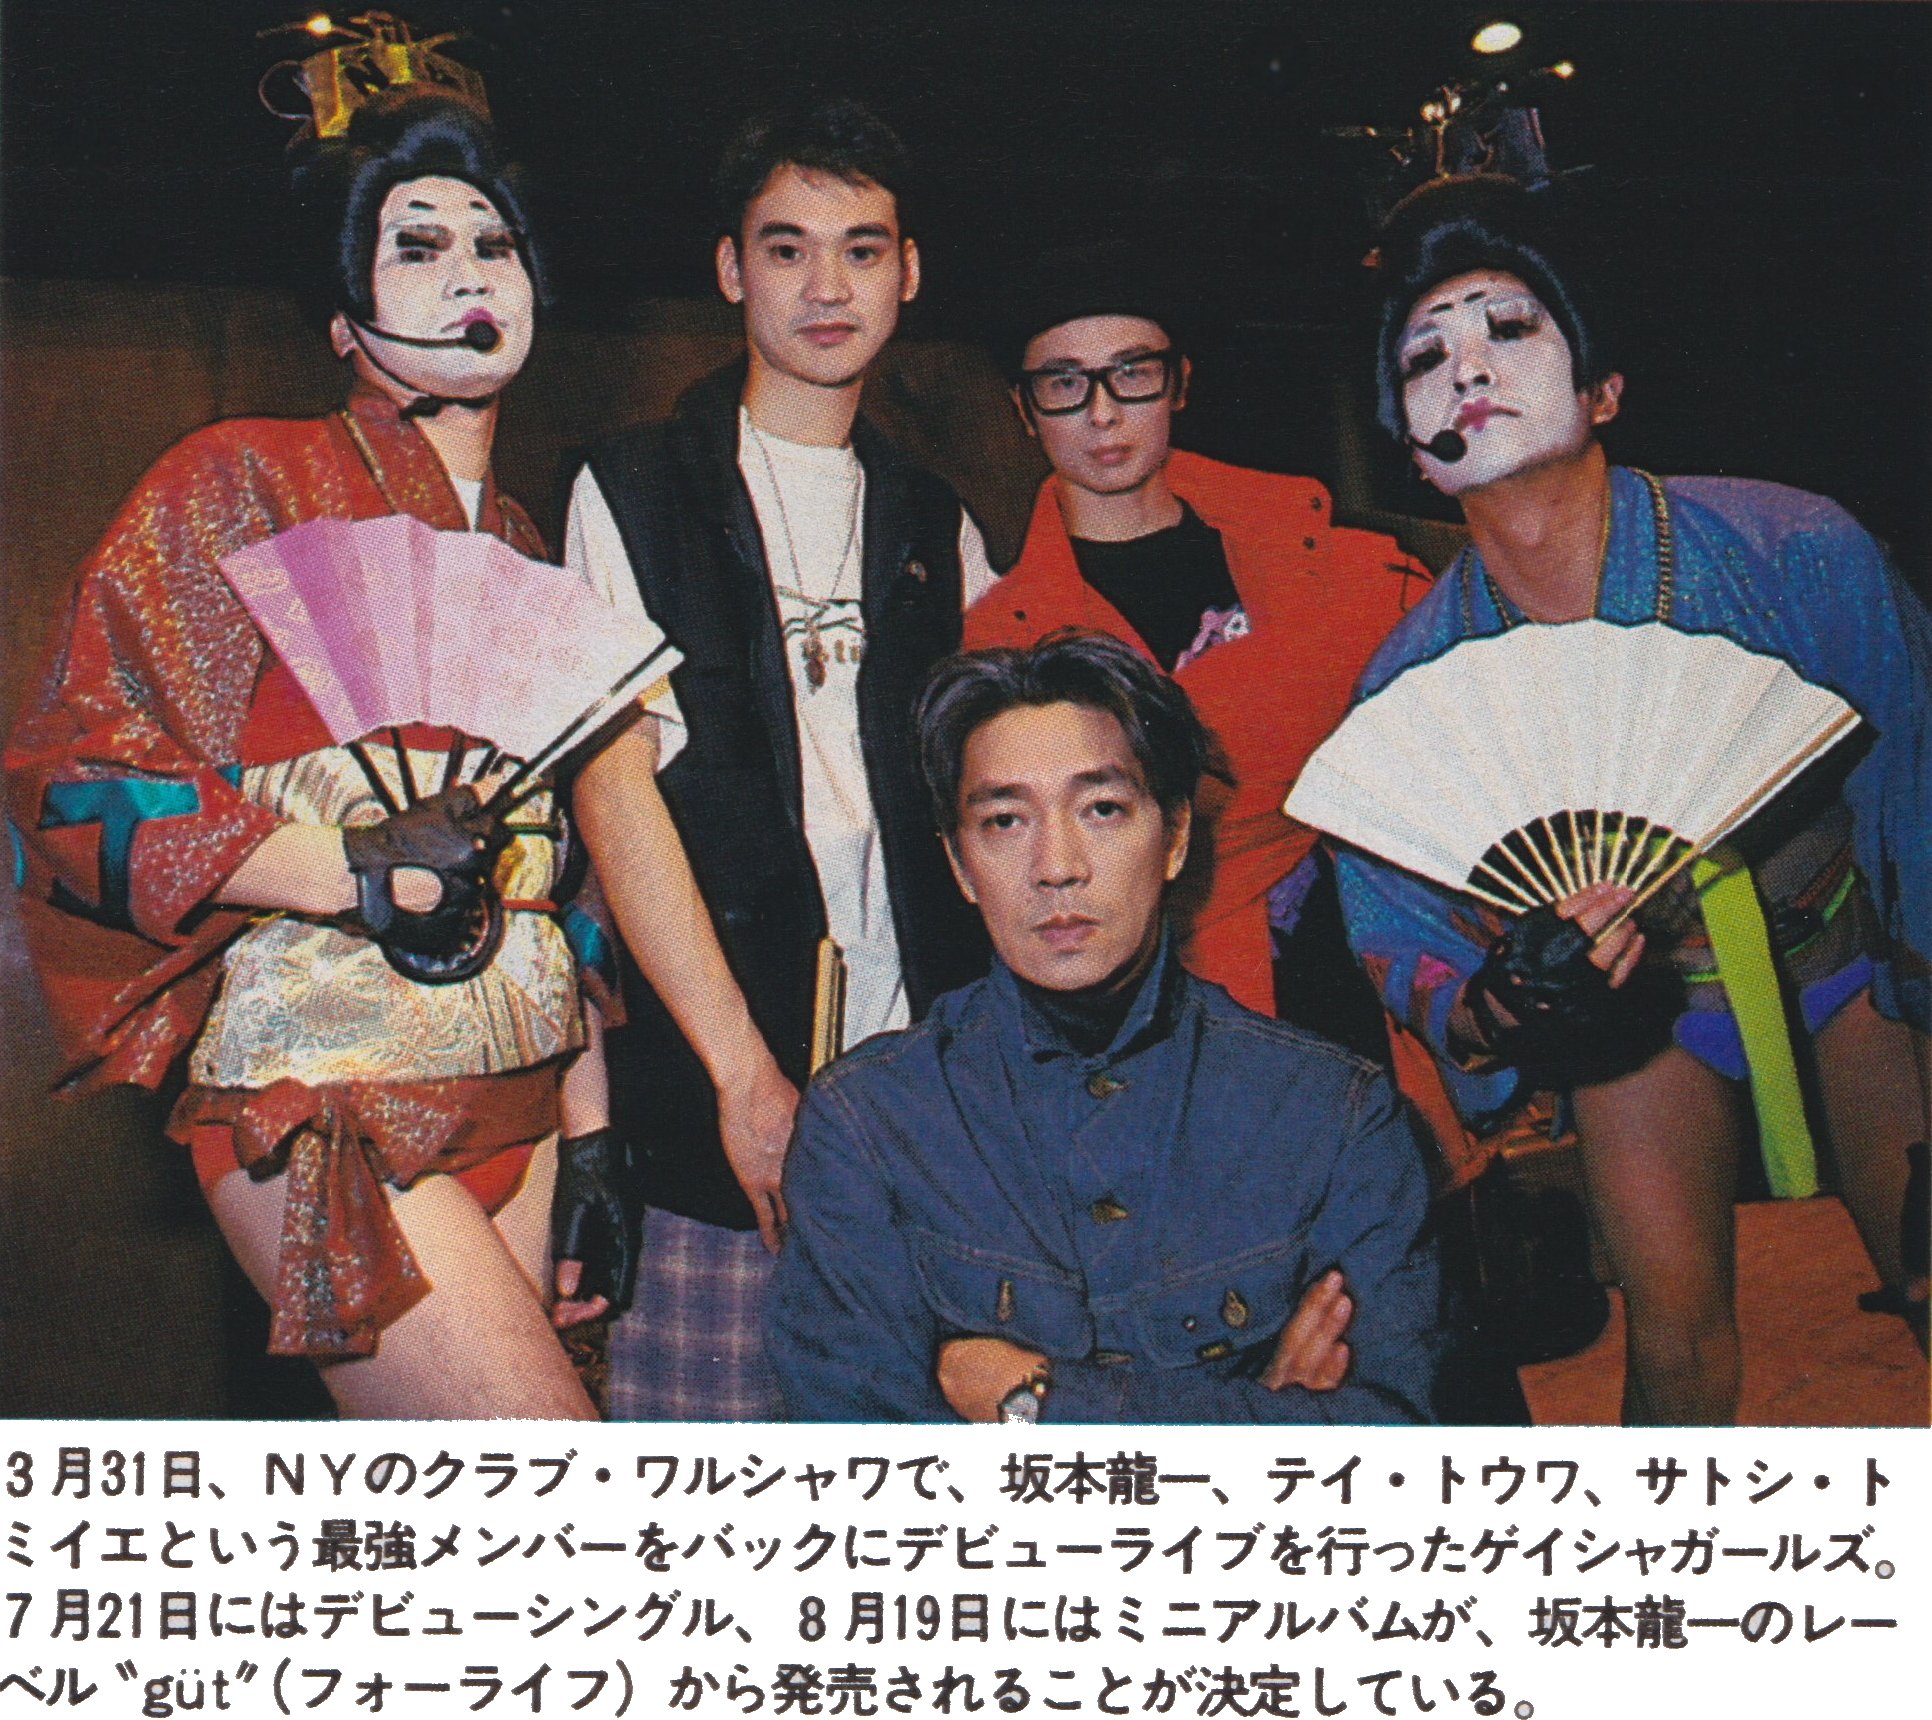 GEISHA GIRLS 1994 CD FLCG-3003 Geisha Girls Remix TEI TOWA 